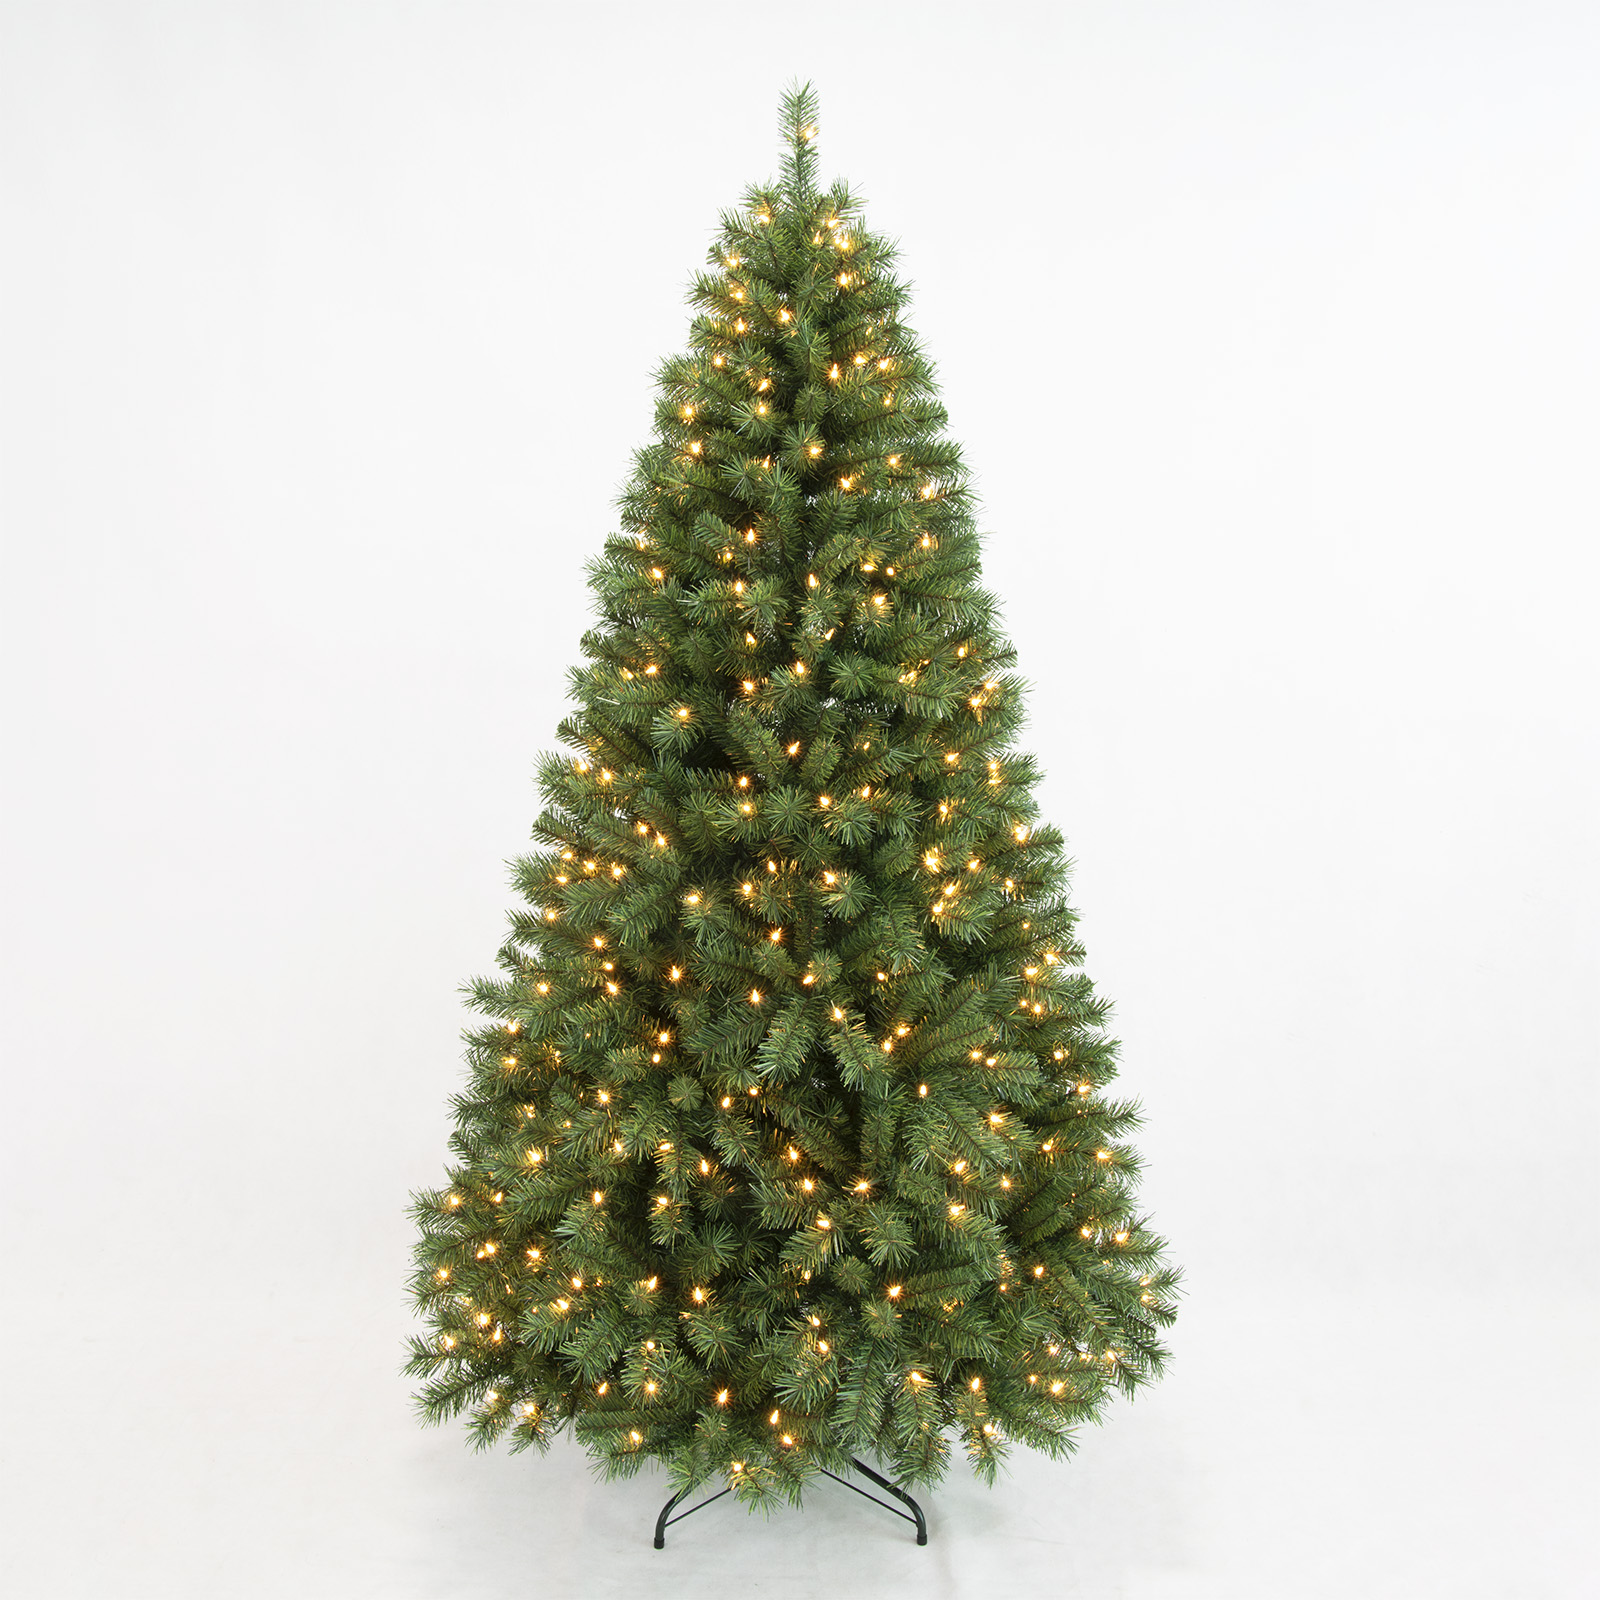 PINEFIELDS Prelit Christmas Tree 7FT, Artificial Christmas Tree with Lights, Lighted Xmas Tree, 400 UL Clear Lights, PVC Mixed Tips, Hinge, Metal Base